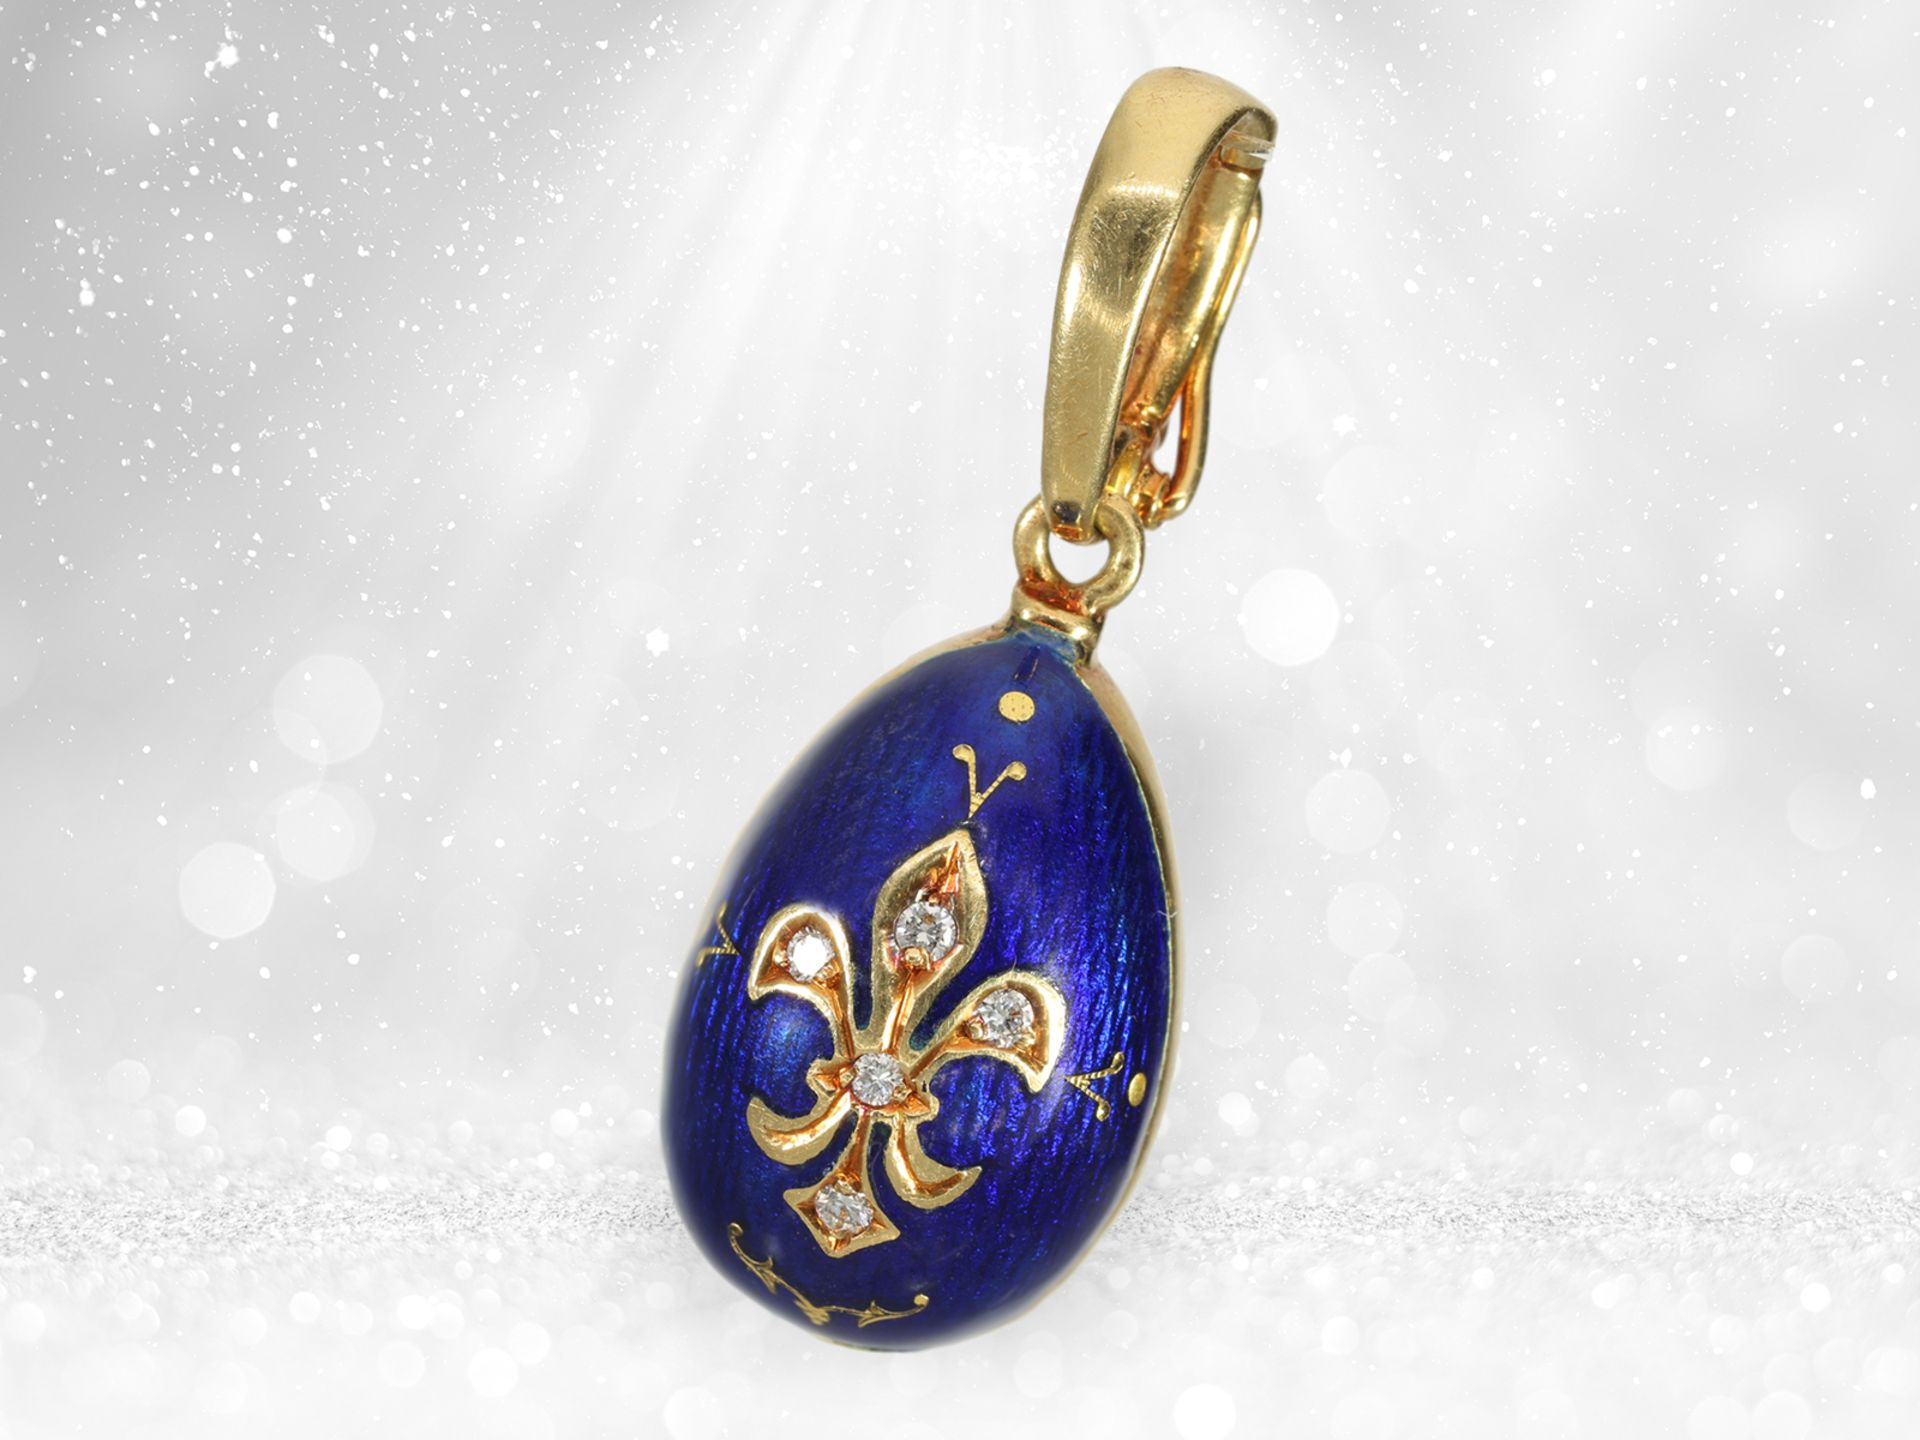 High-quality Fabergé enamel pendant with brilliant-cut diamonds, 18K gold, limited to 500 pieces